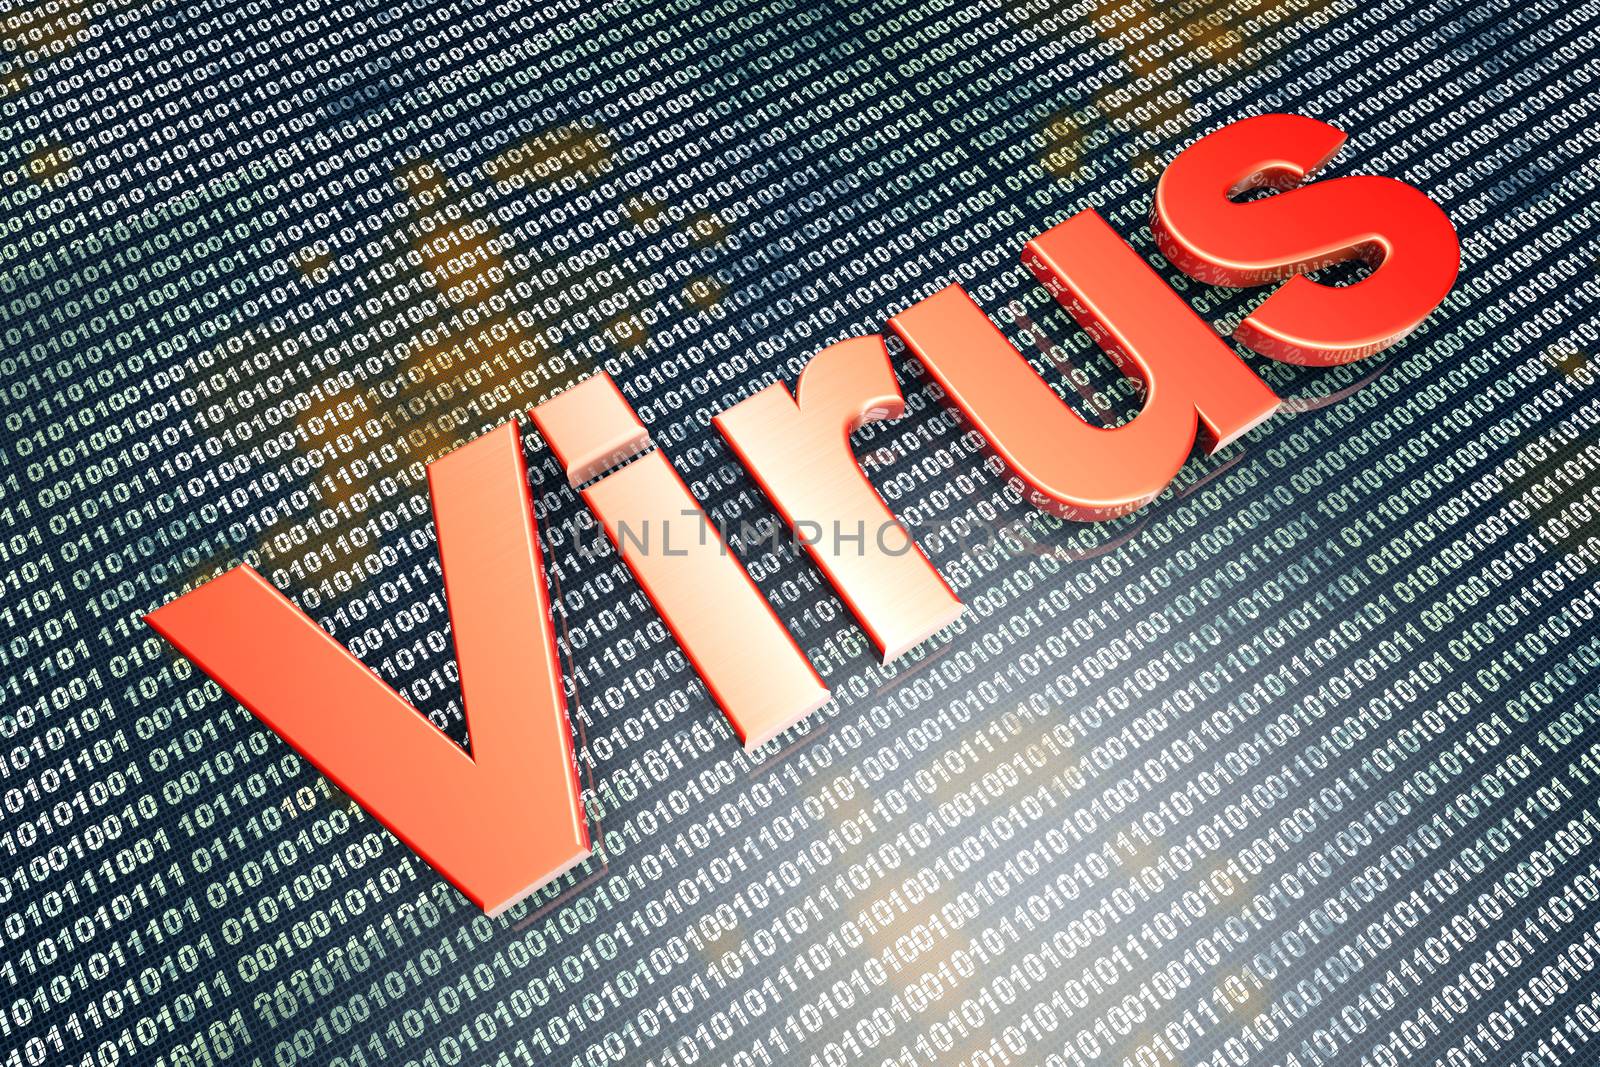 Computer virus in digital code. 3D illustration.